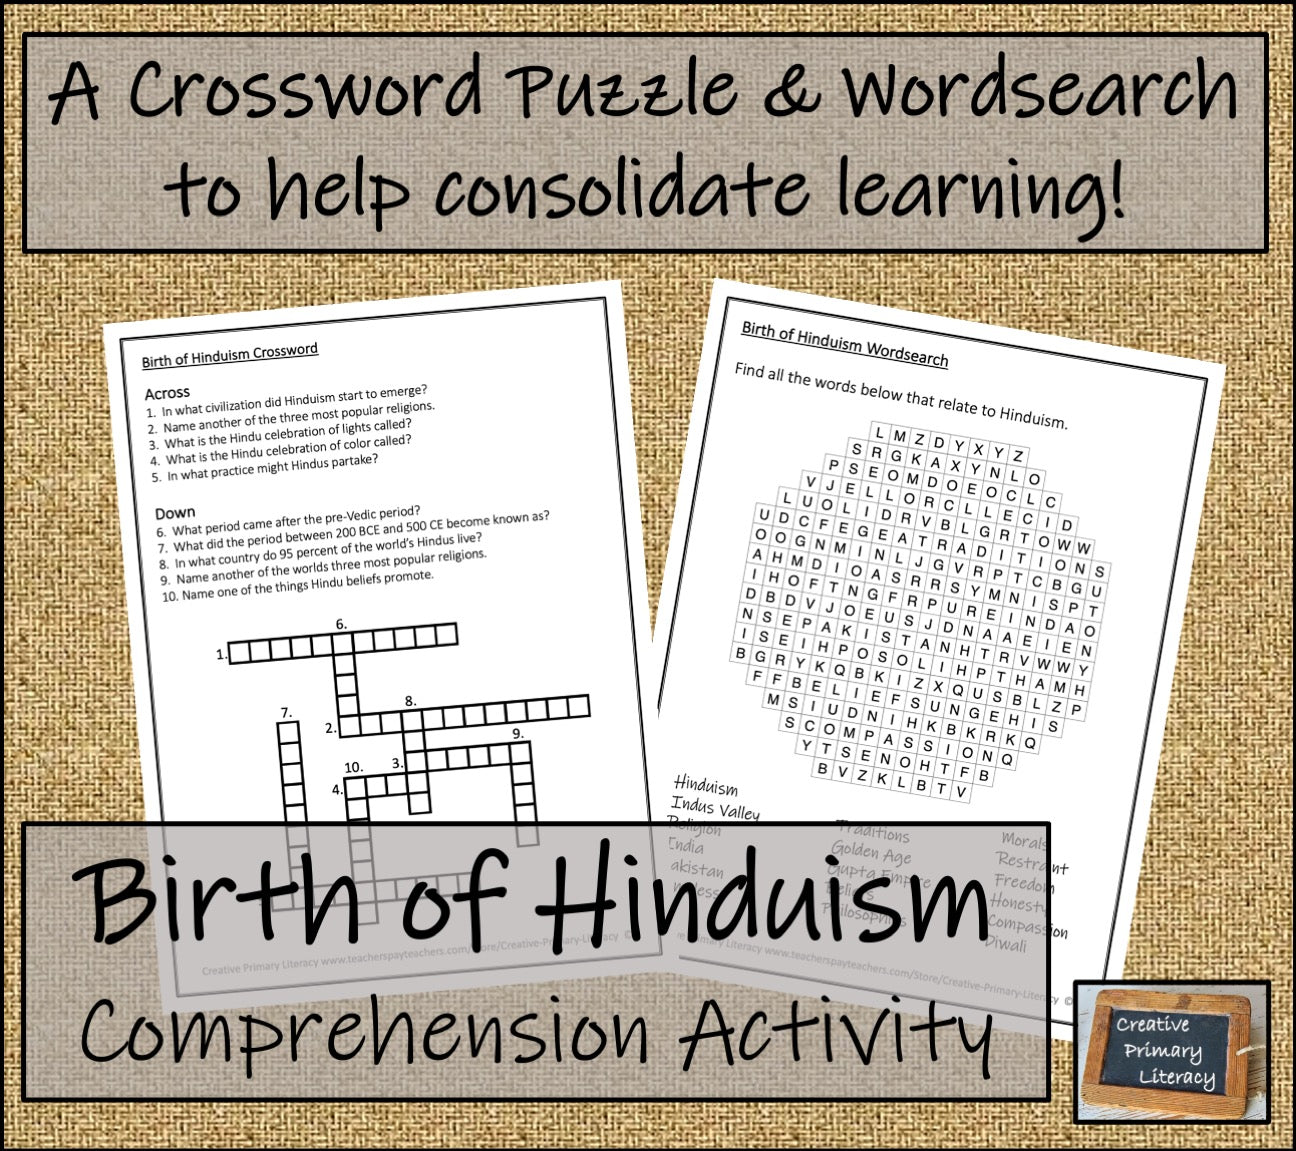 The Birth of Hinduism Close Reading Activity | 3rd Grade & 4th Grade